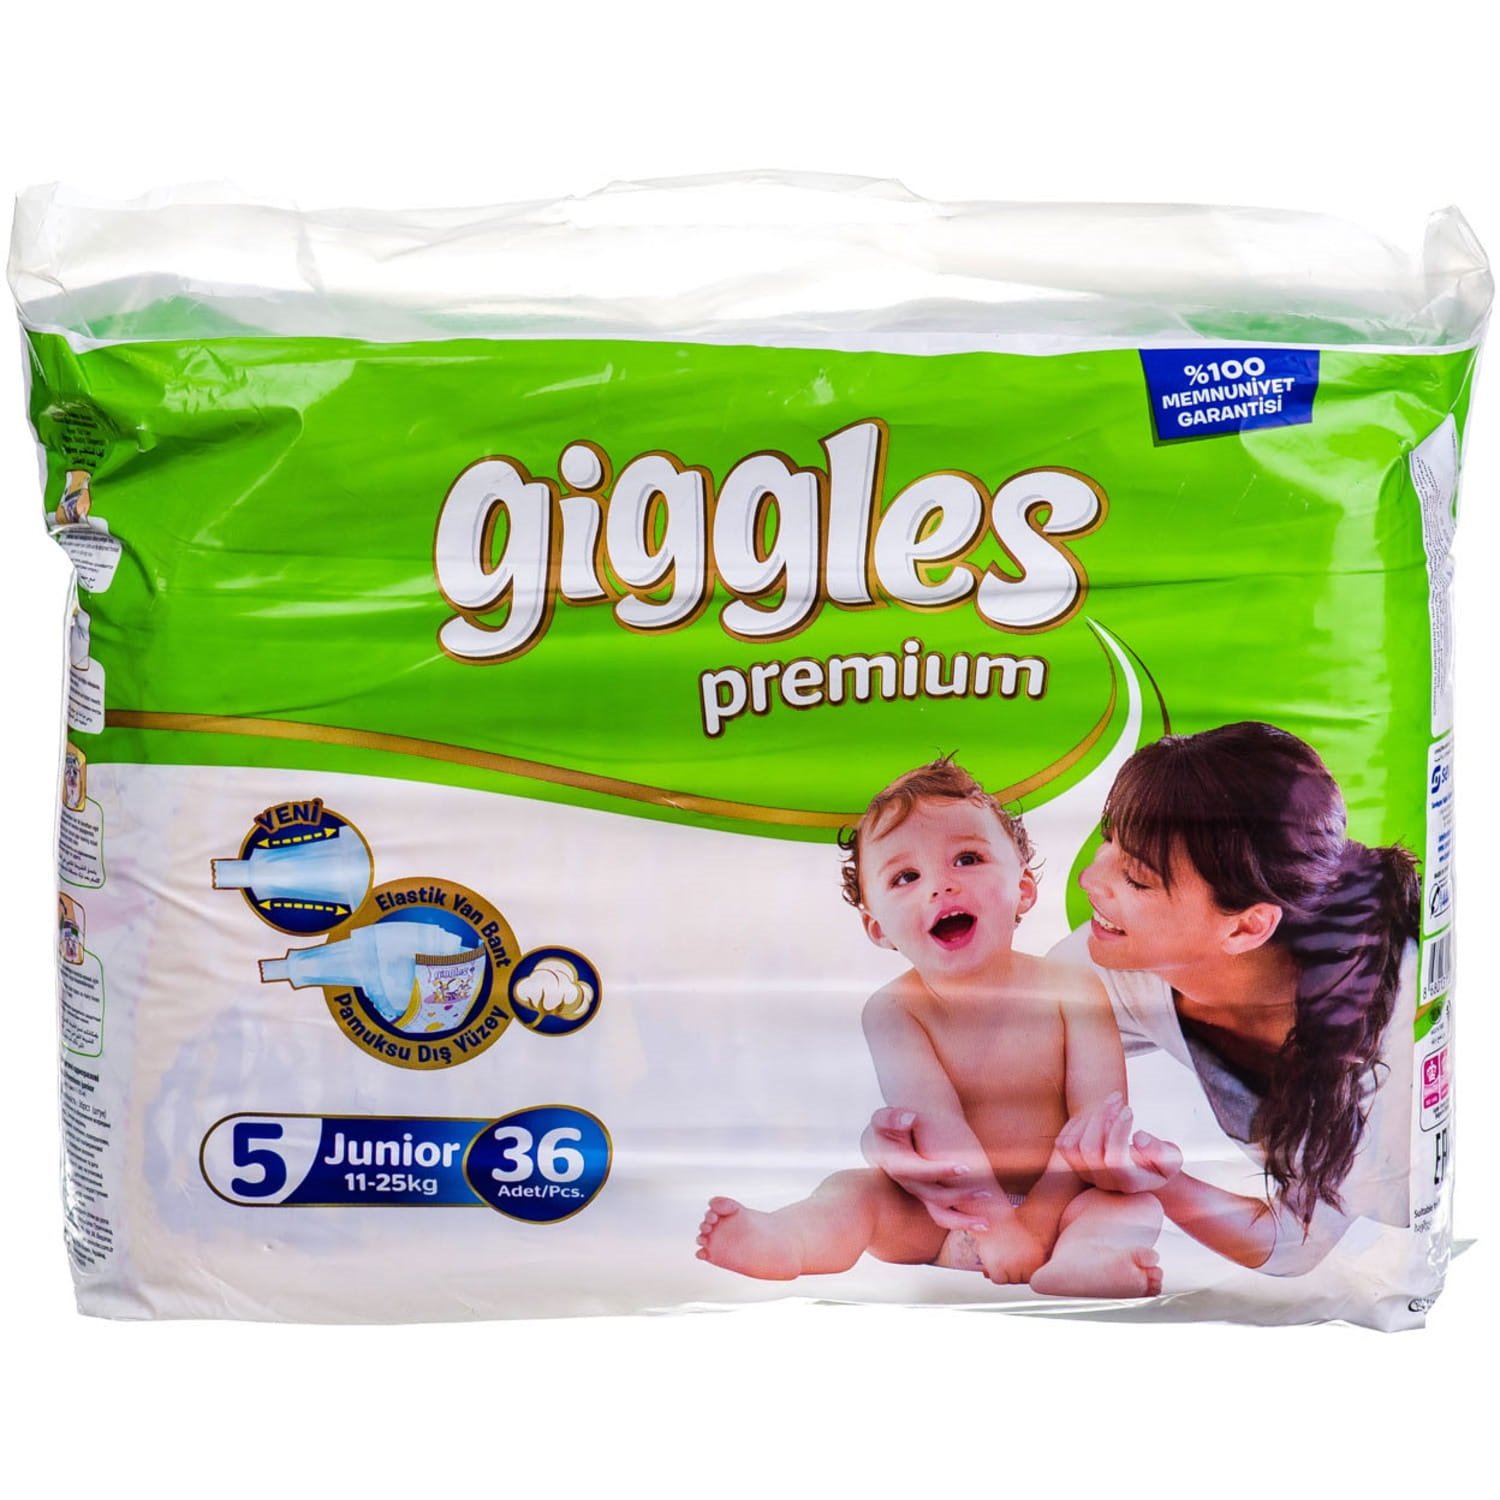 Підгузки дитячі Giggles Premium Junior 5 (11-25 кг), 36 шт. - фото 1